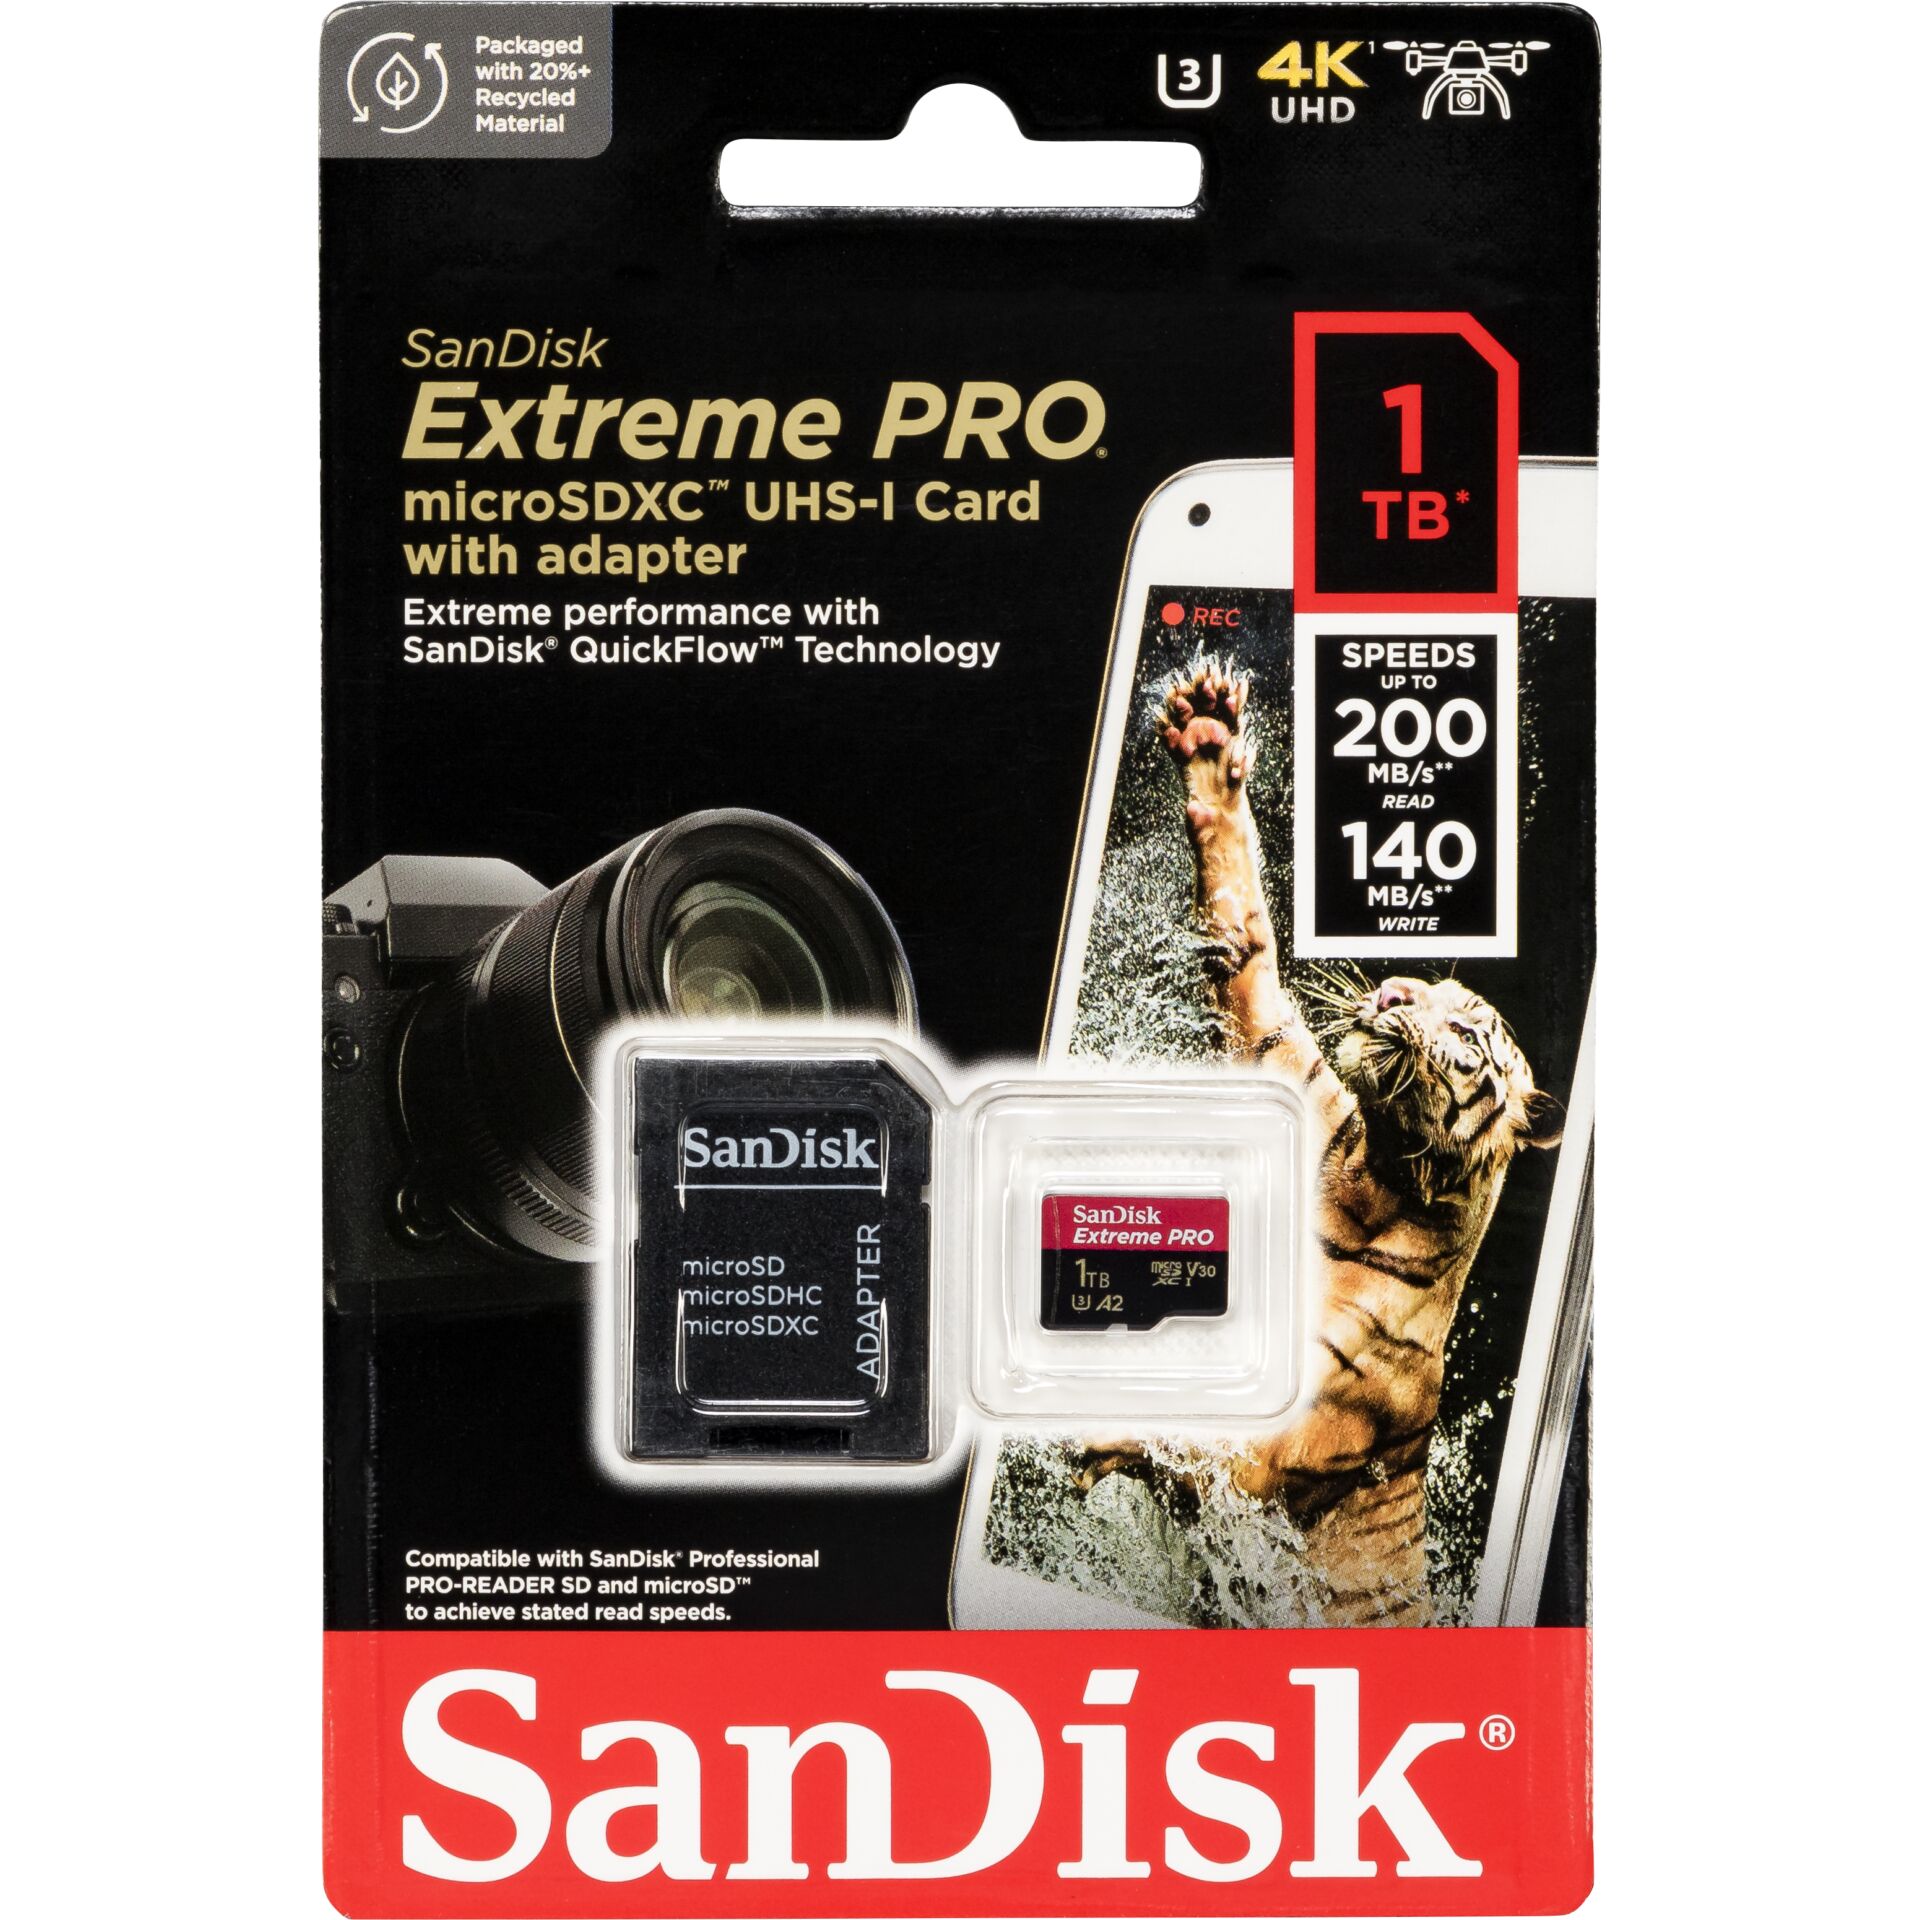 1.0 TB SanDisk Extreme PRO microSDXC Speicherkarte, lesen: 200MB/s, schreiben: 140MB/s